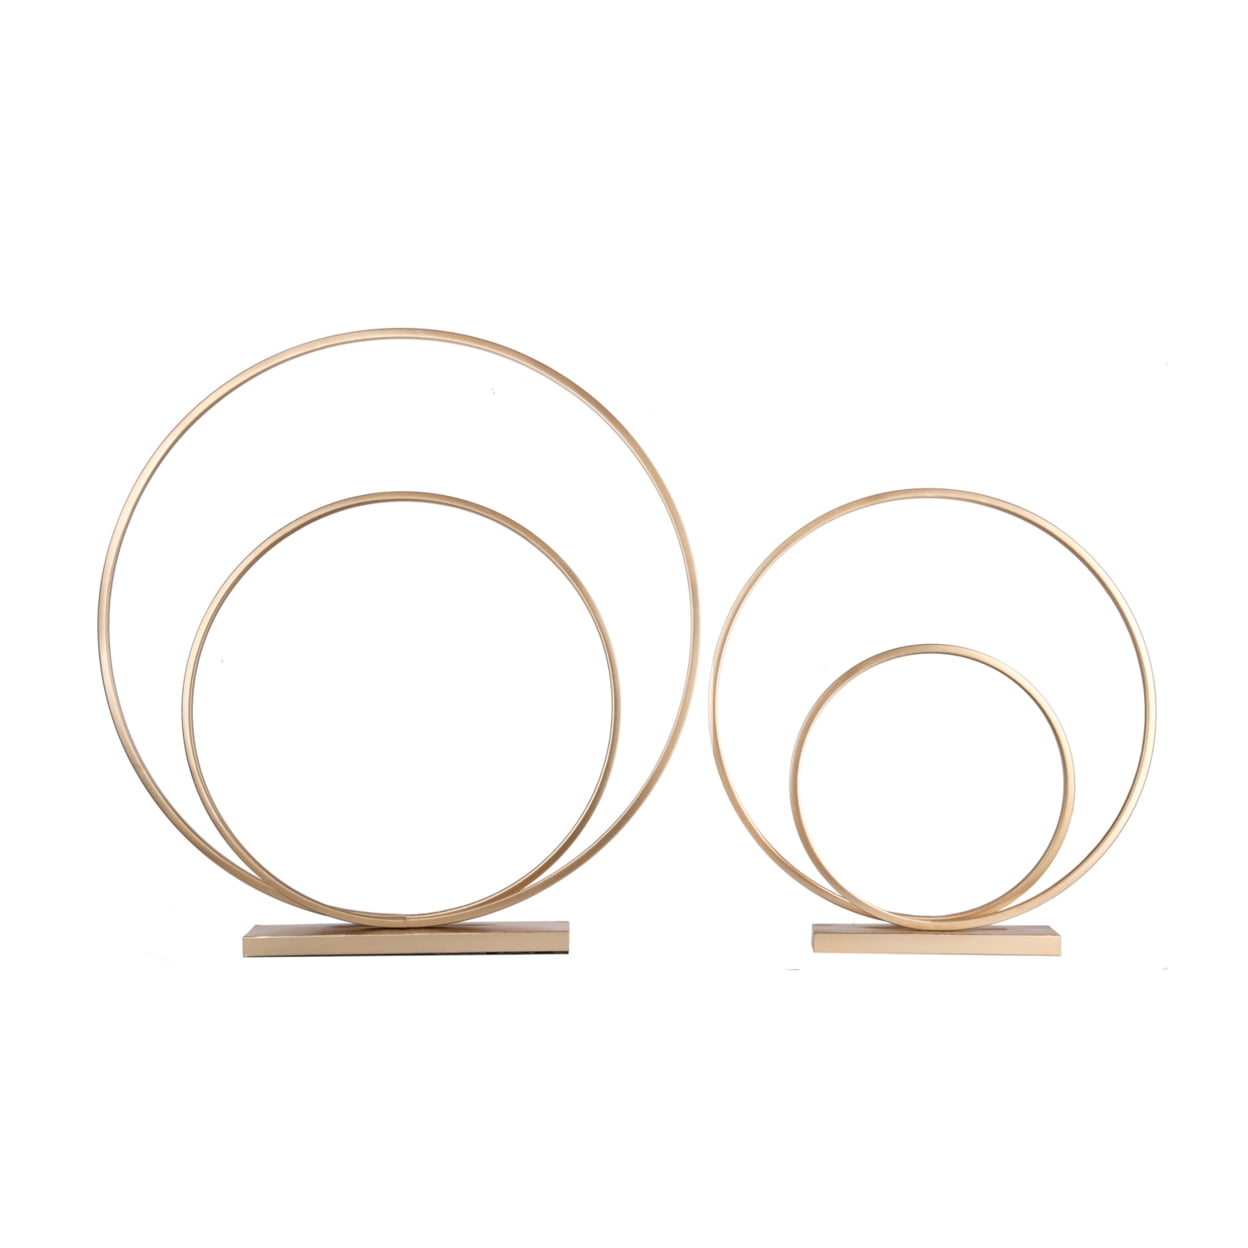 Metal Round Spiral Ring Abstract Sculpture Design on Rectangular Base ...